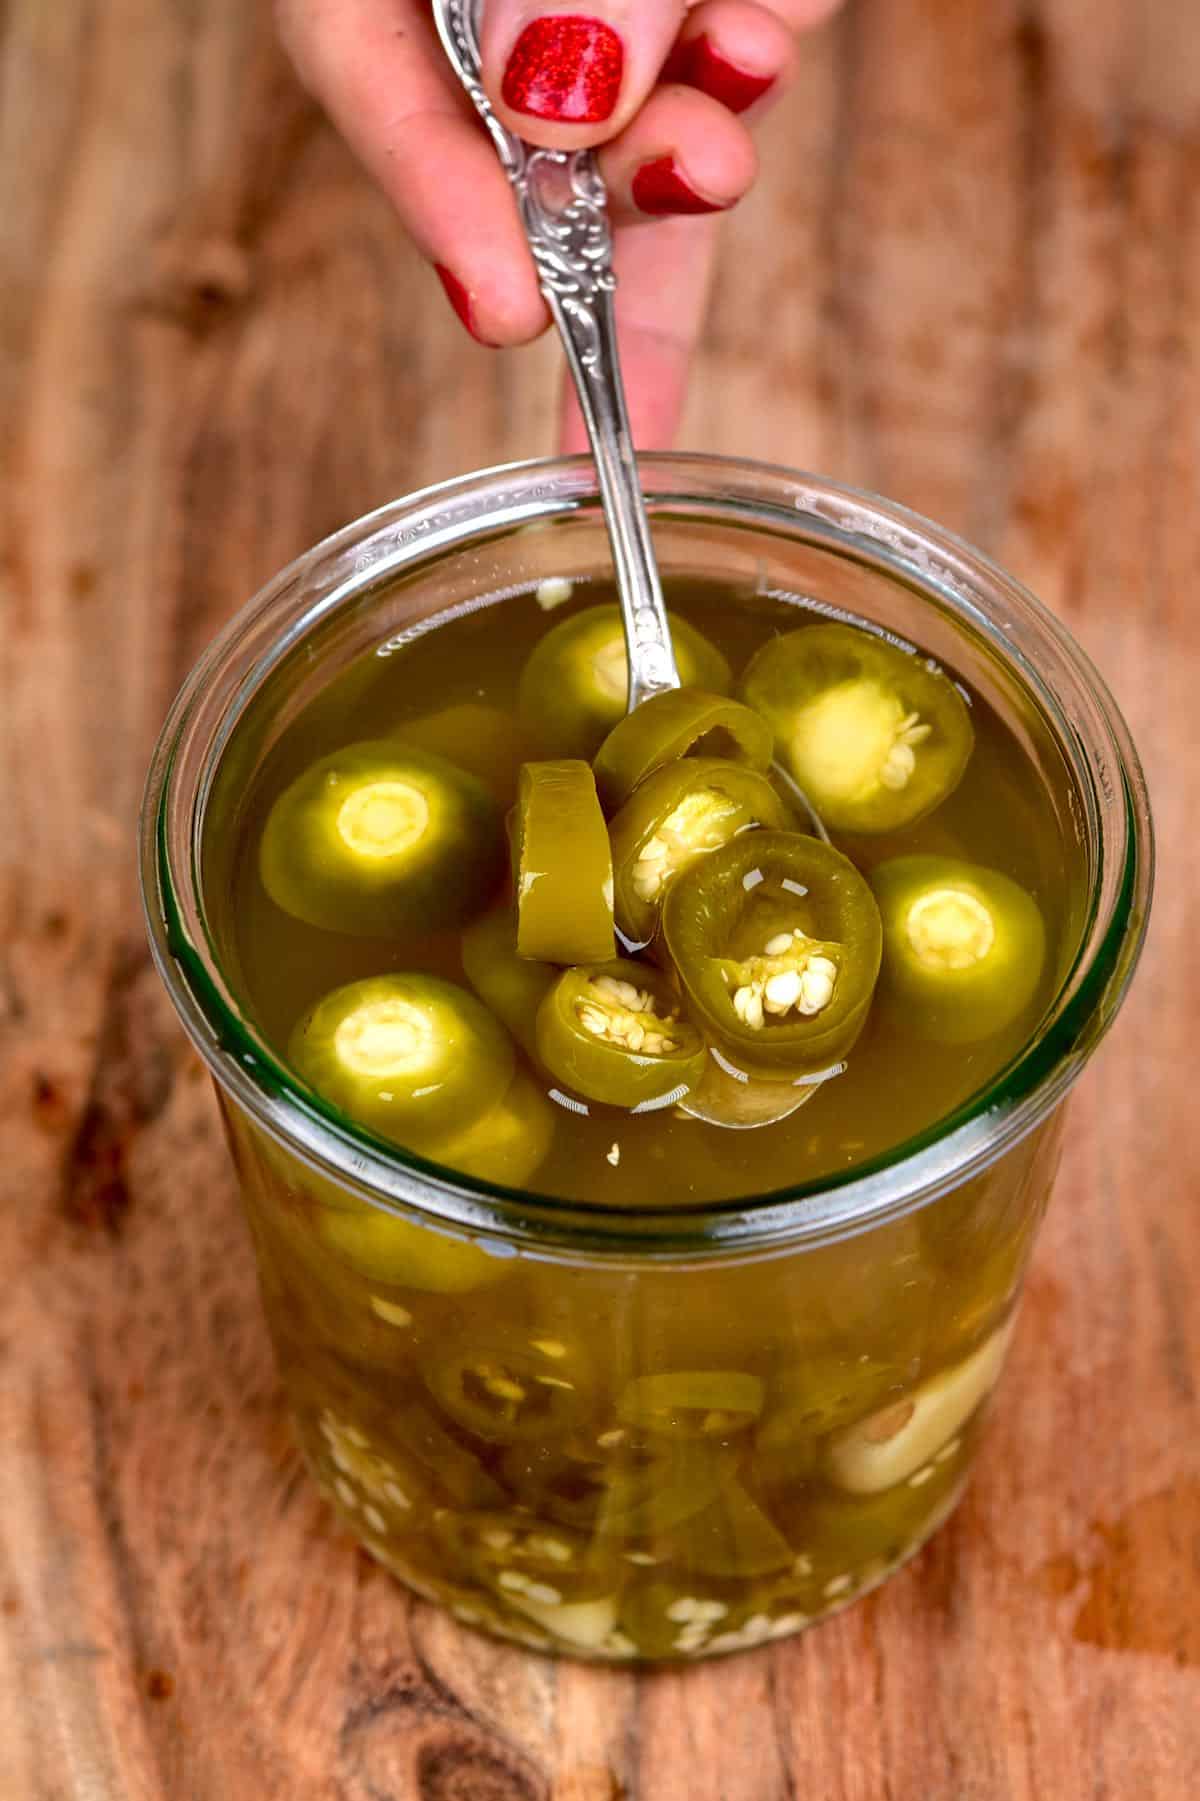 Pickled jalapeños in a jar